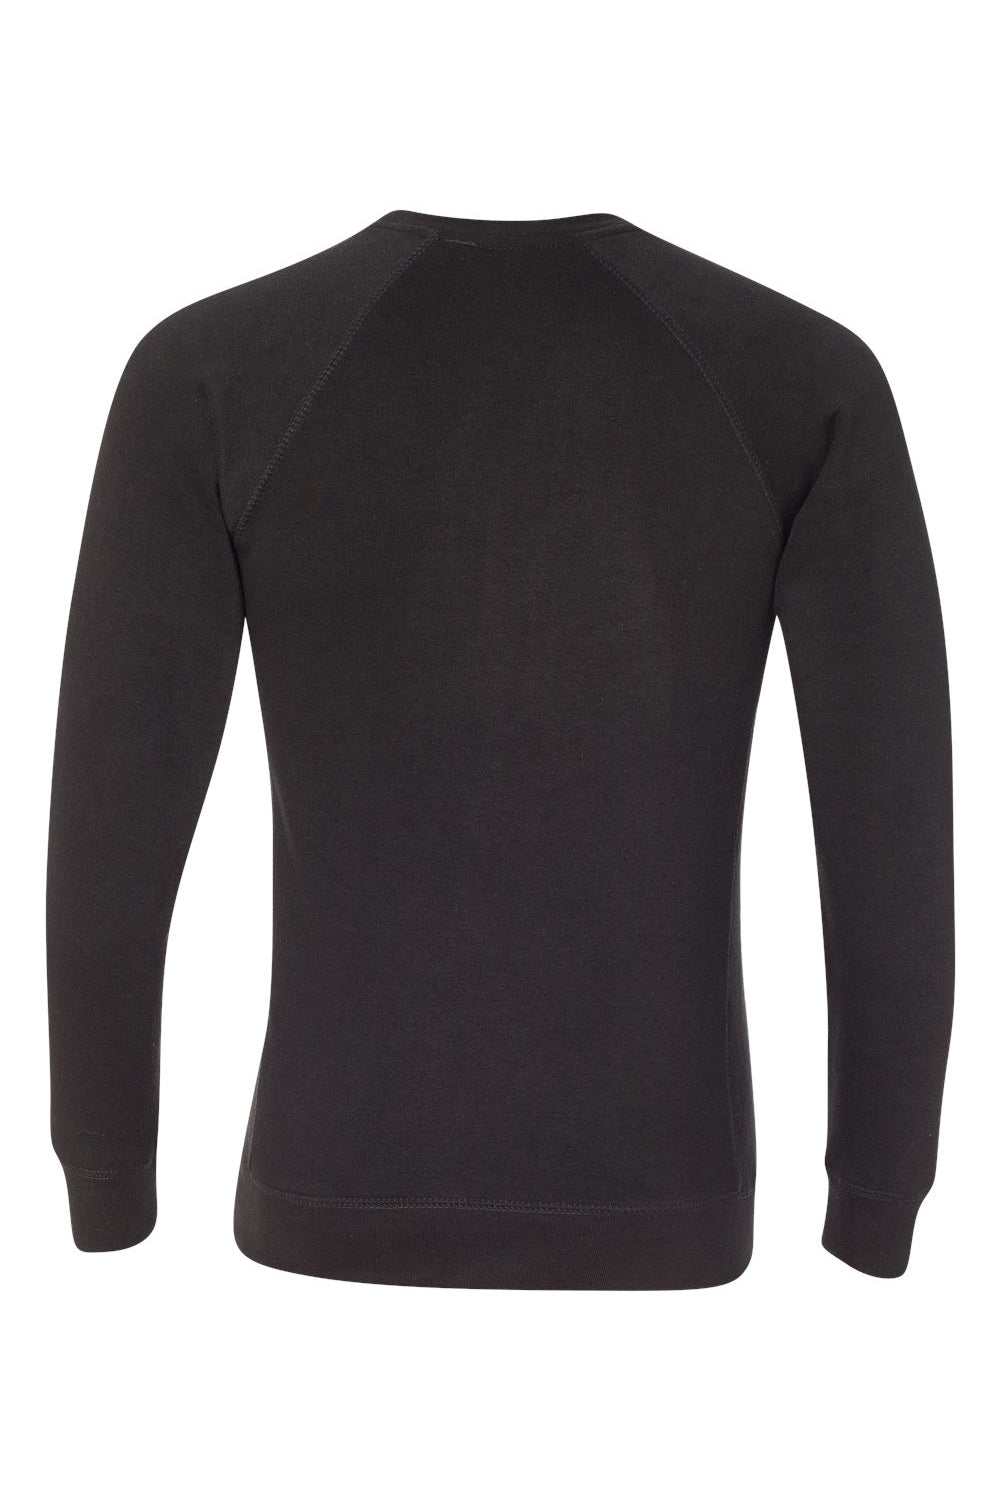 Independent Trading Co. PRM30SBC Mens Special Blend Crewneck Raglan Sweatshirt Black Flat Back